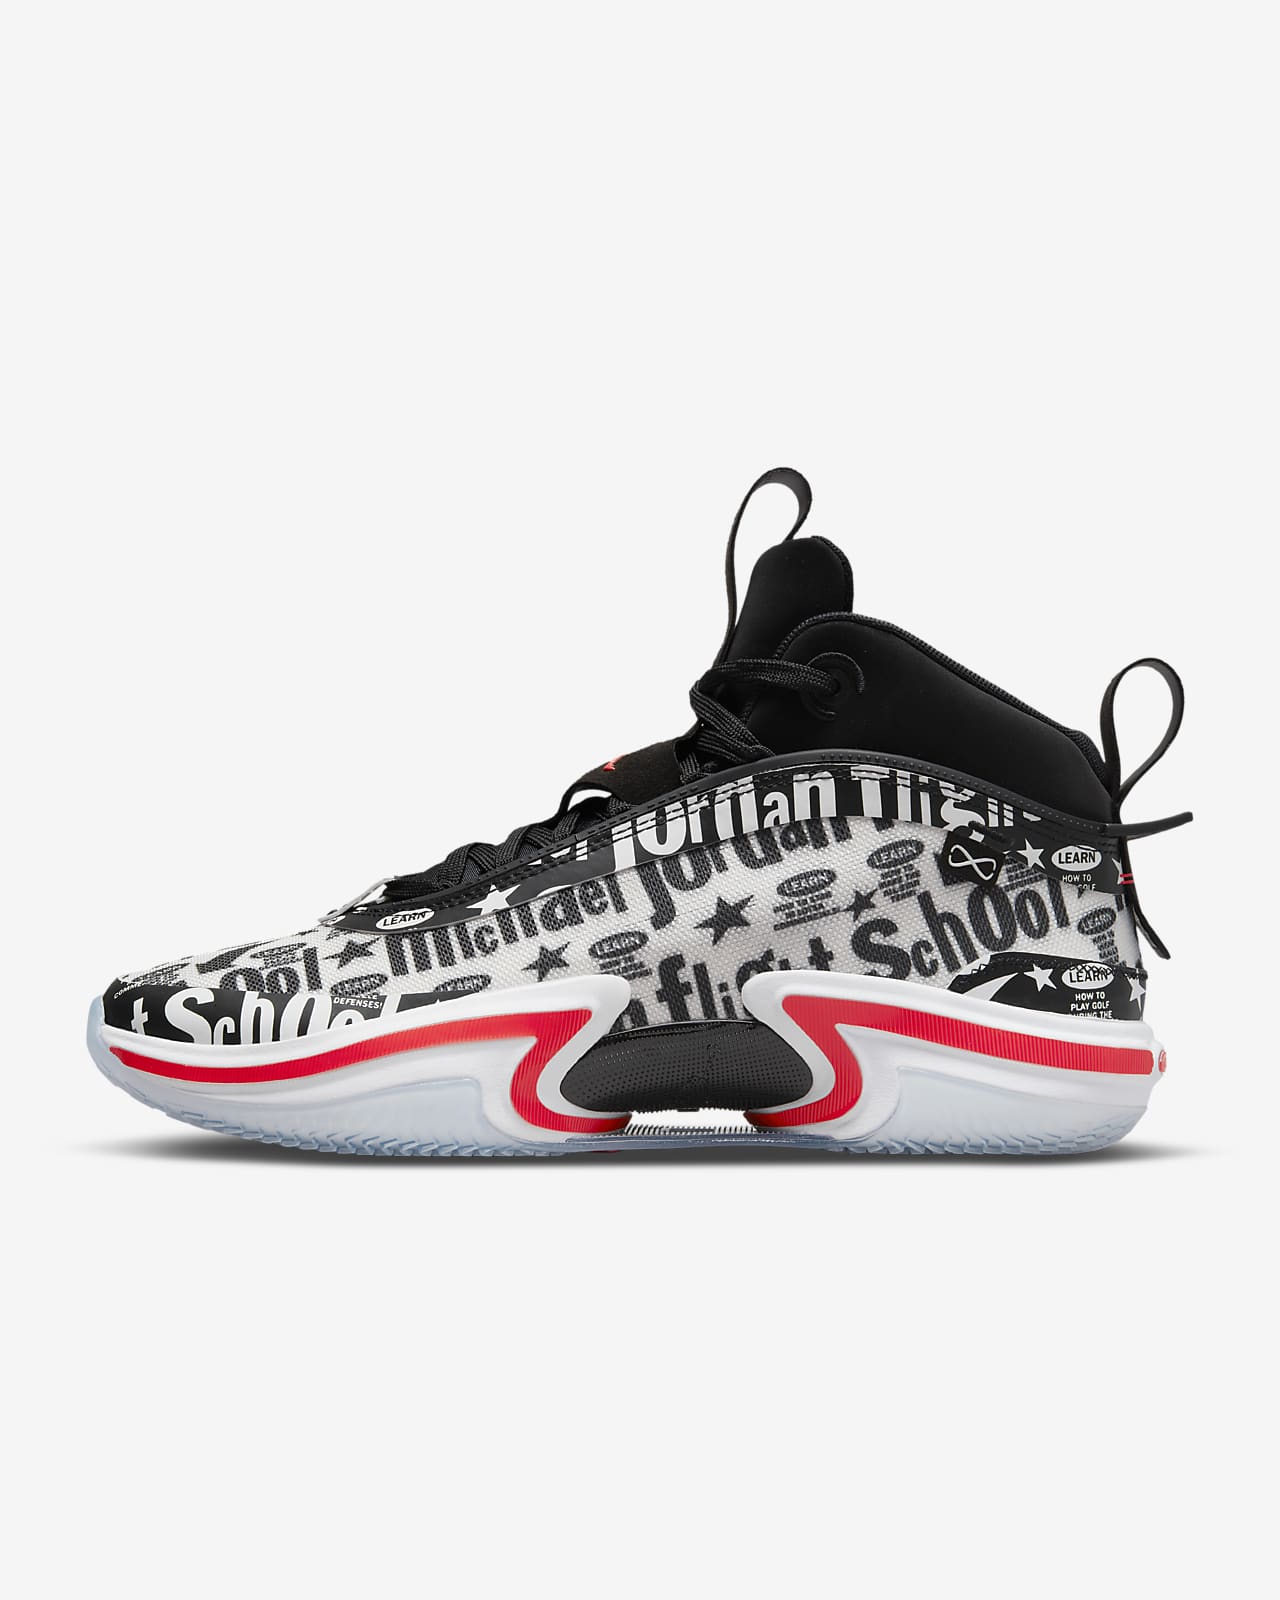 Air Jordan XXXVI FS Men's Basketball Shoes